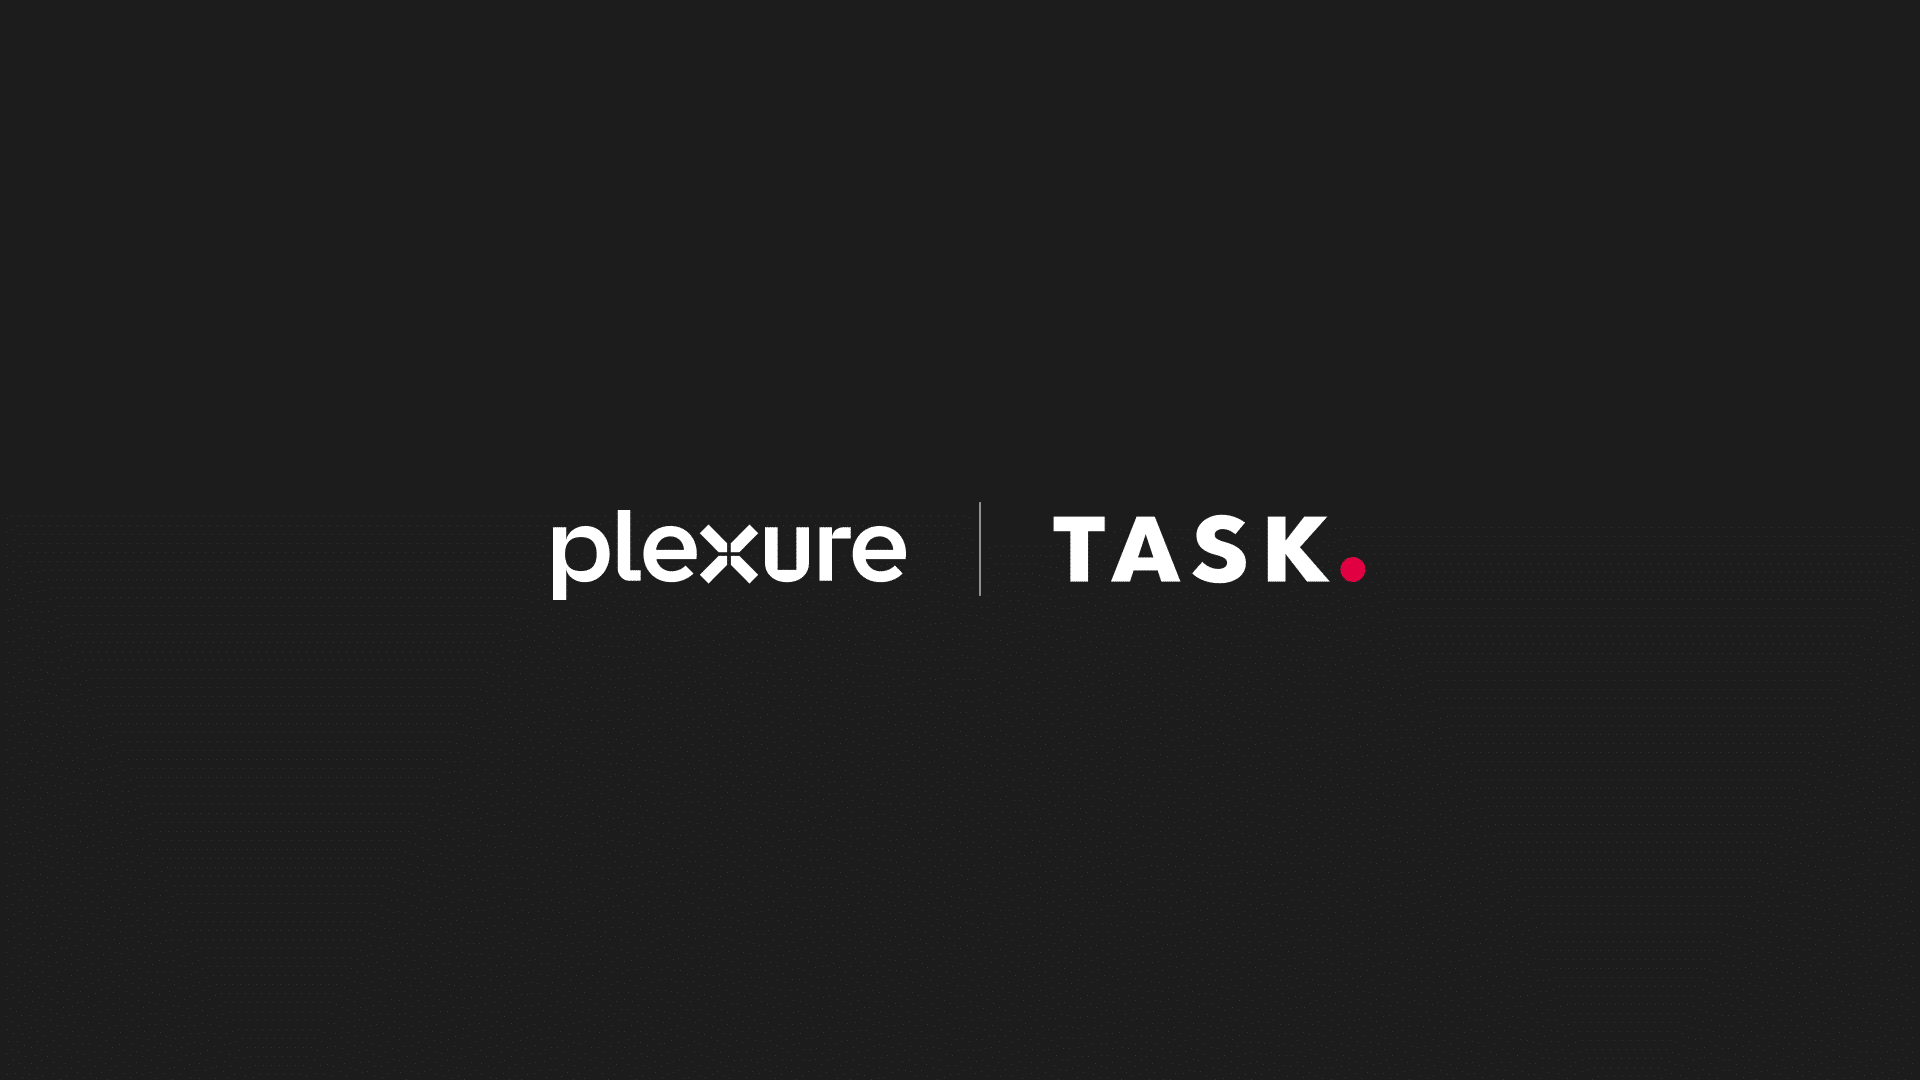 Pleasure & TASK logo on a black background.